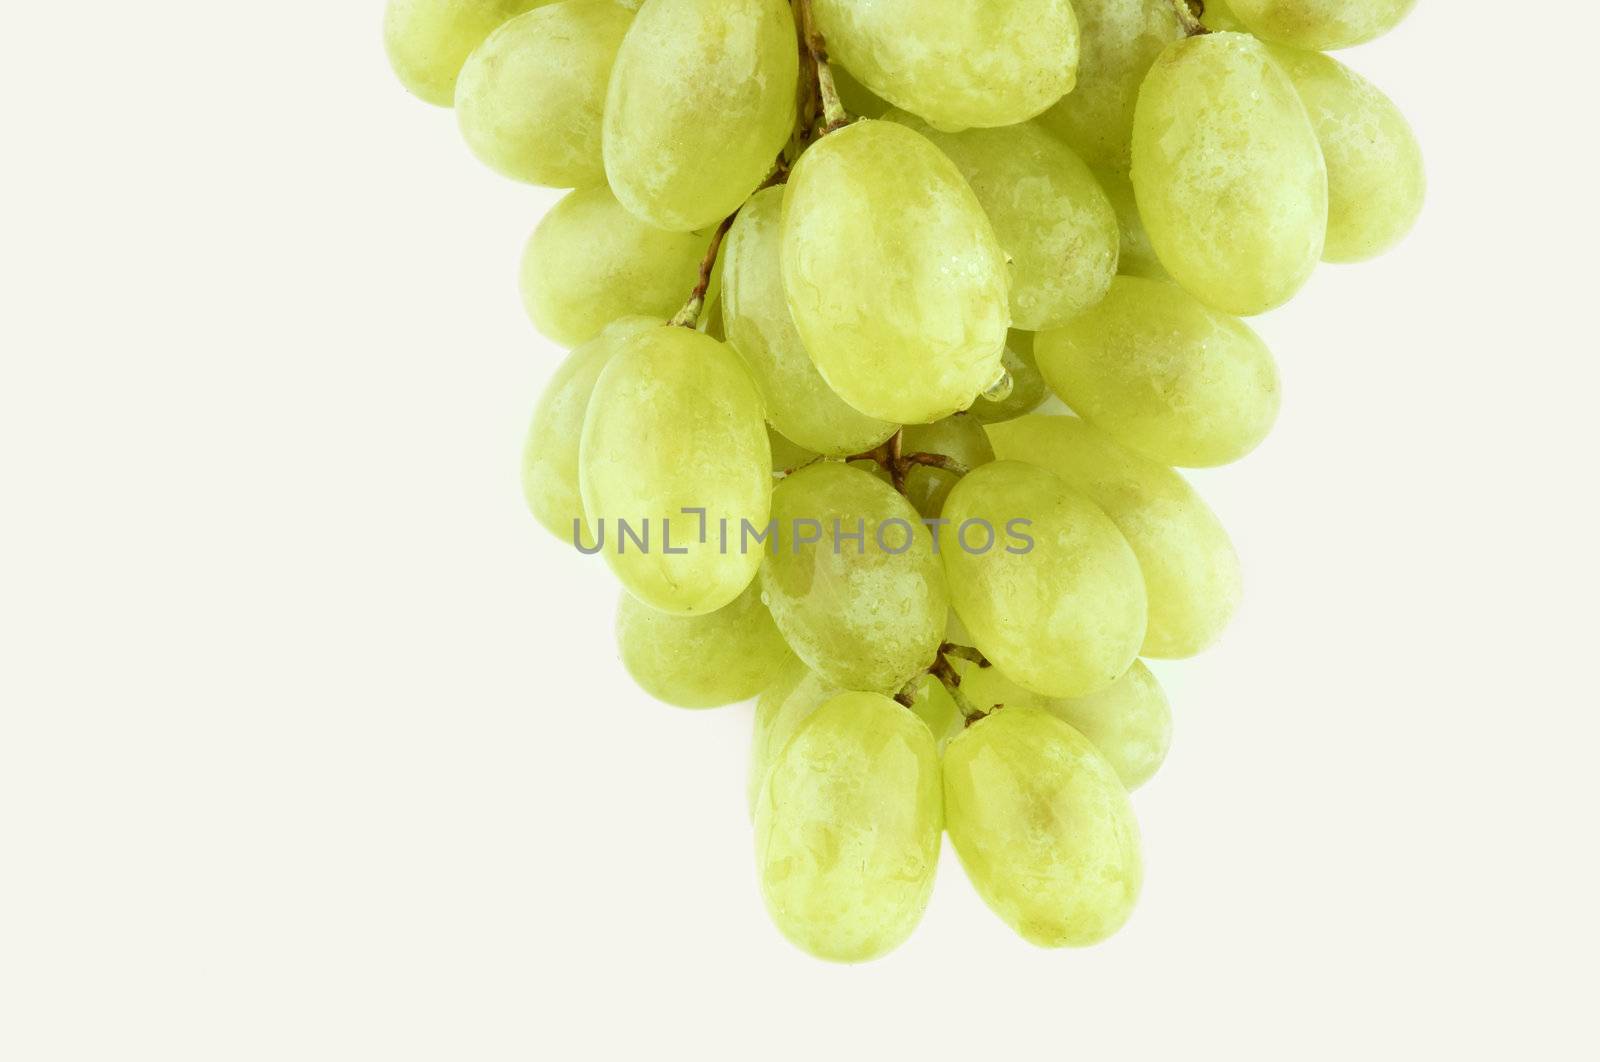 wet sweet grapes by Kuzma